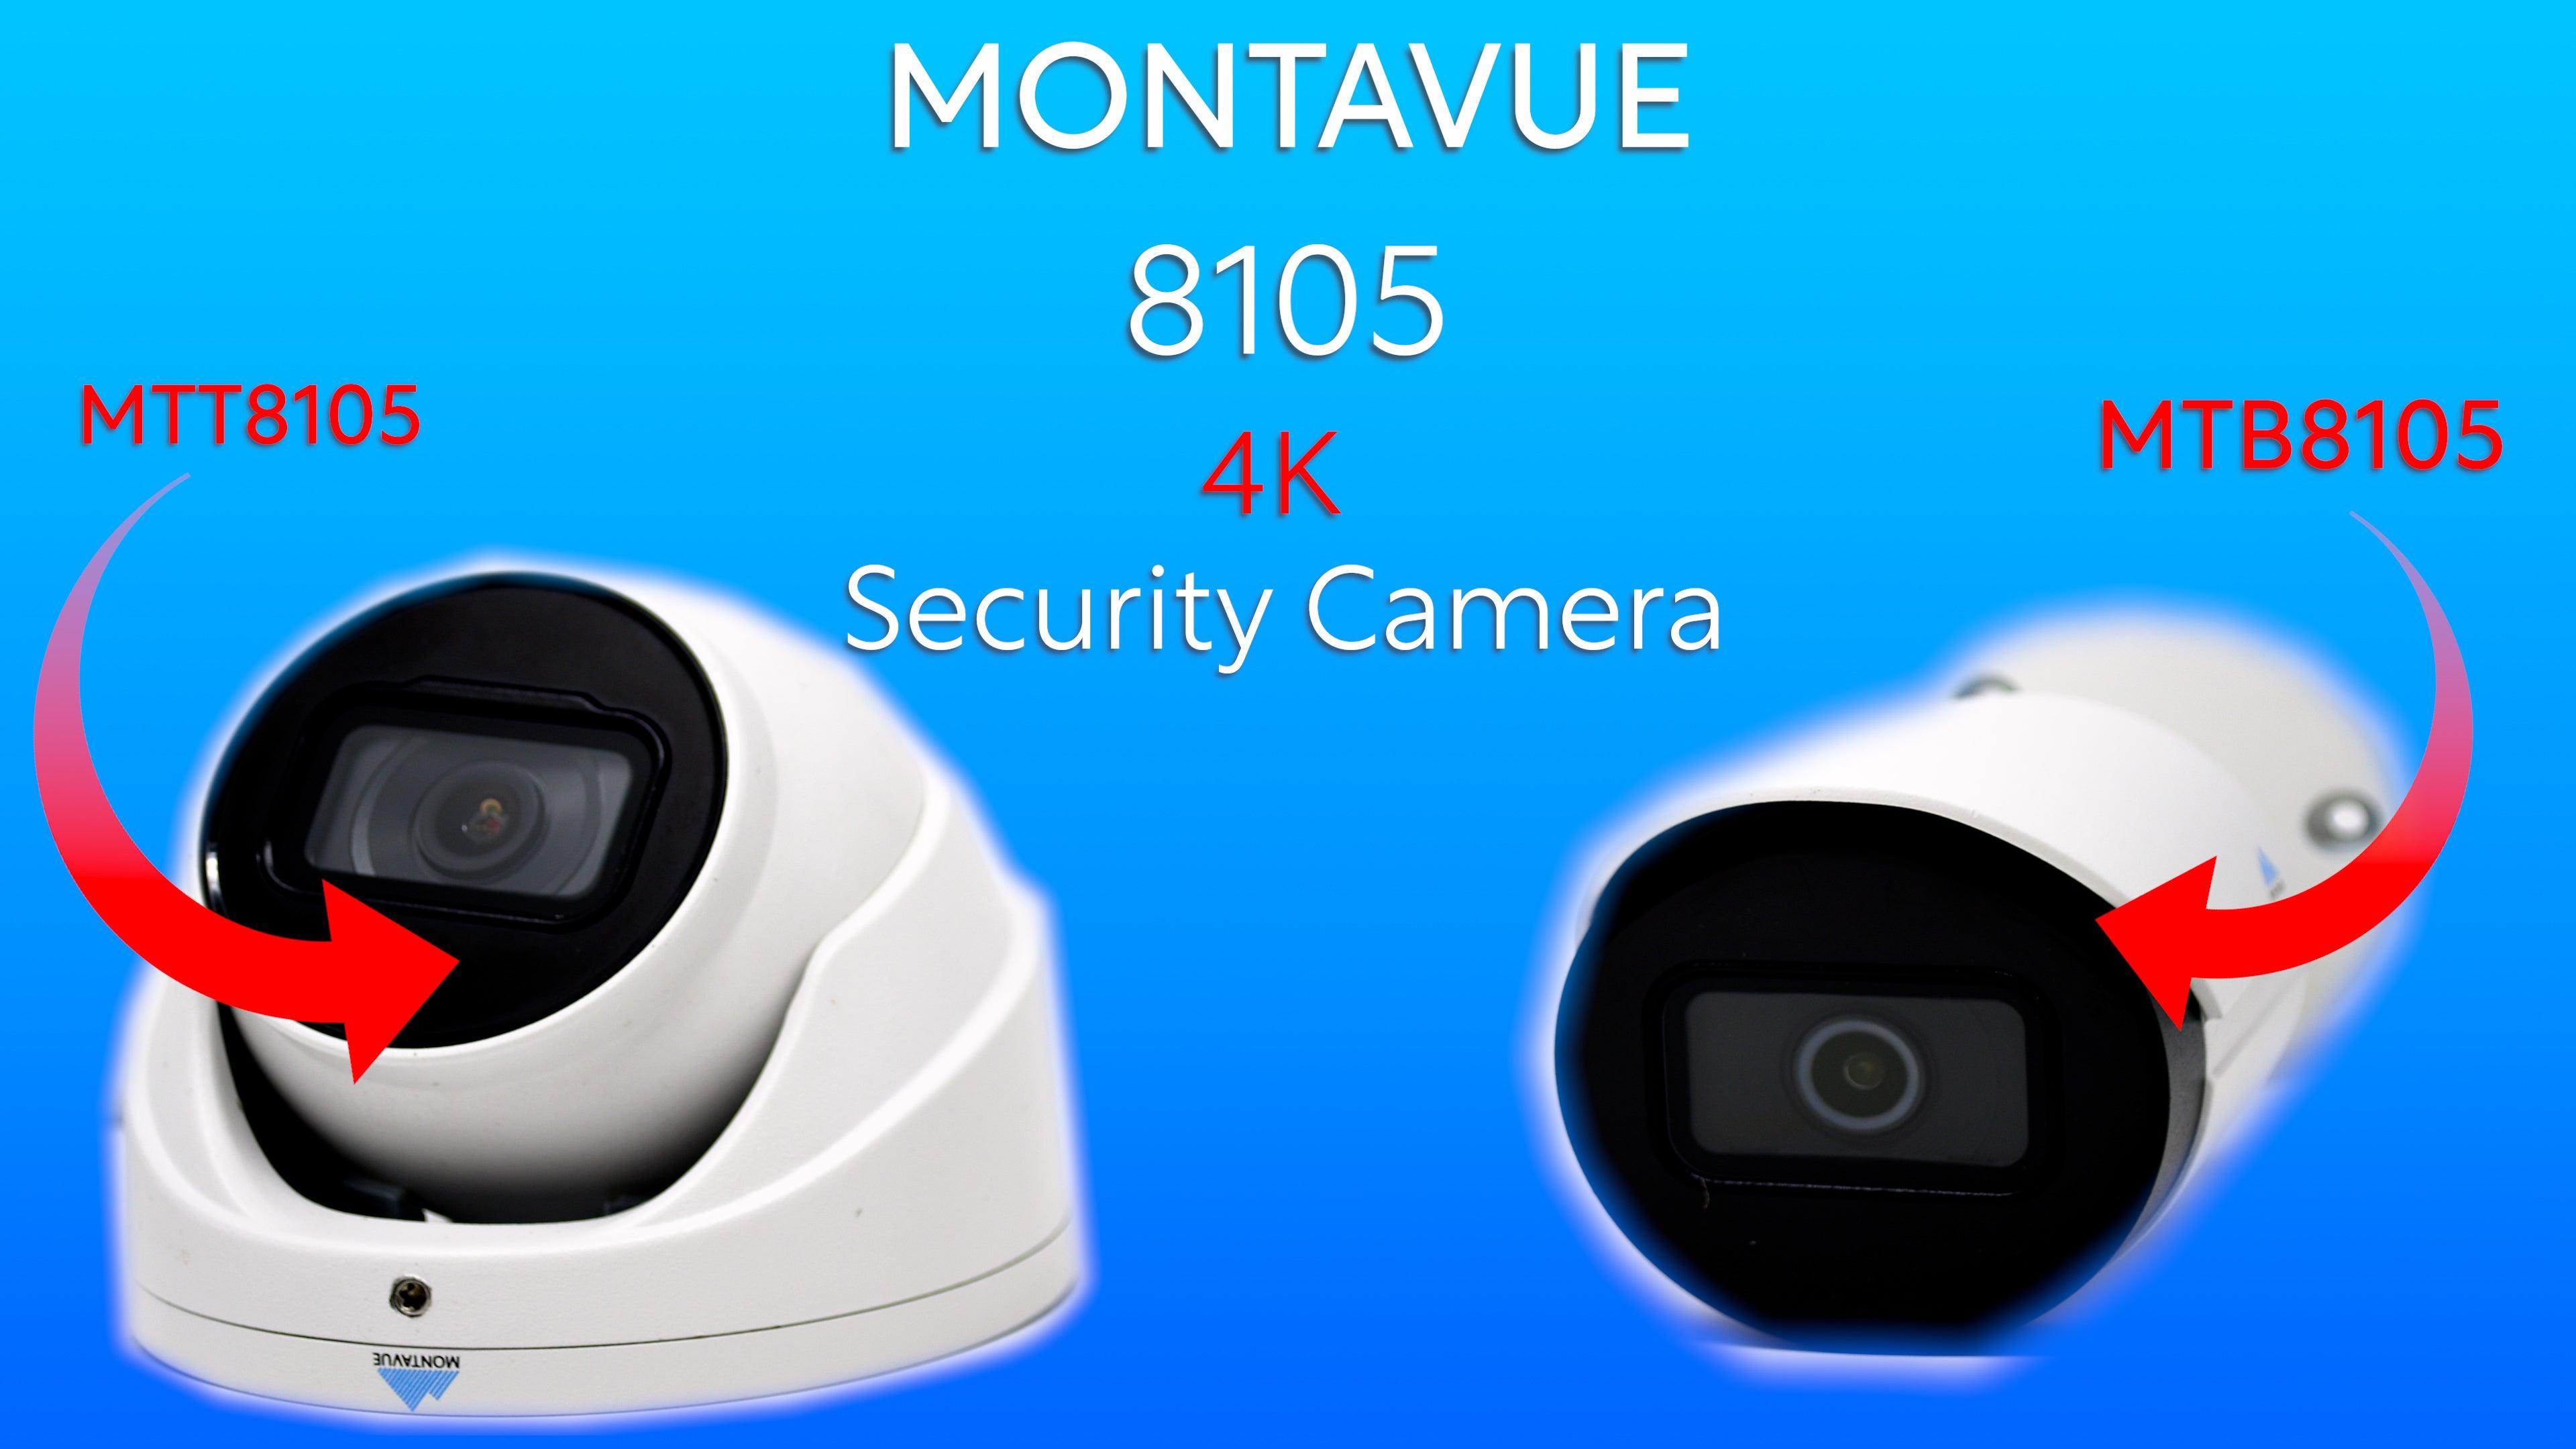 Montavue 4K Outdoor Security Camera Overview (MTT8105 & MTB8105) 4K @ 15FPS - Montavue